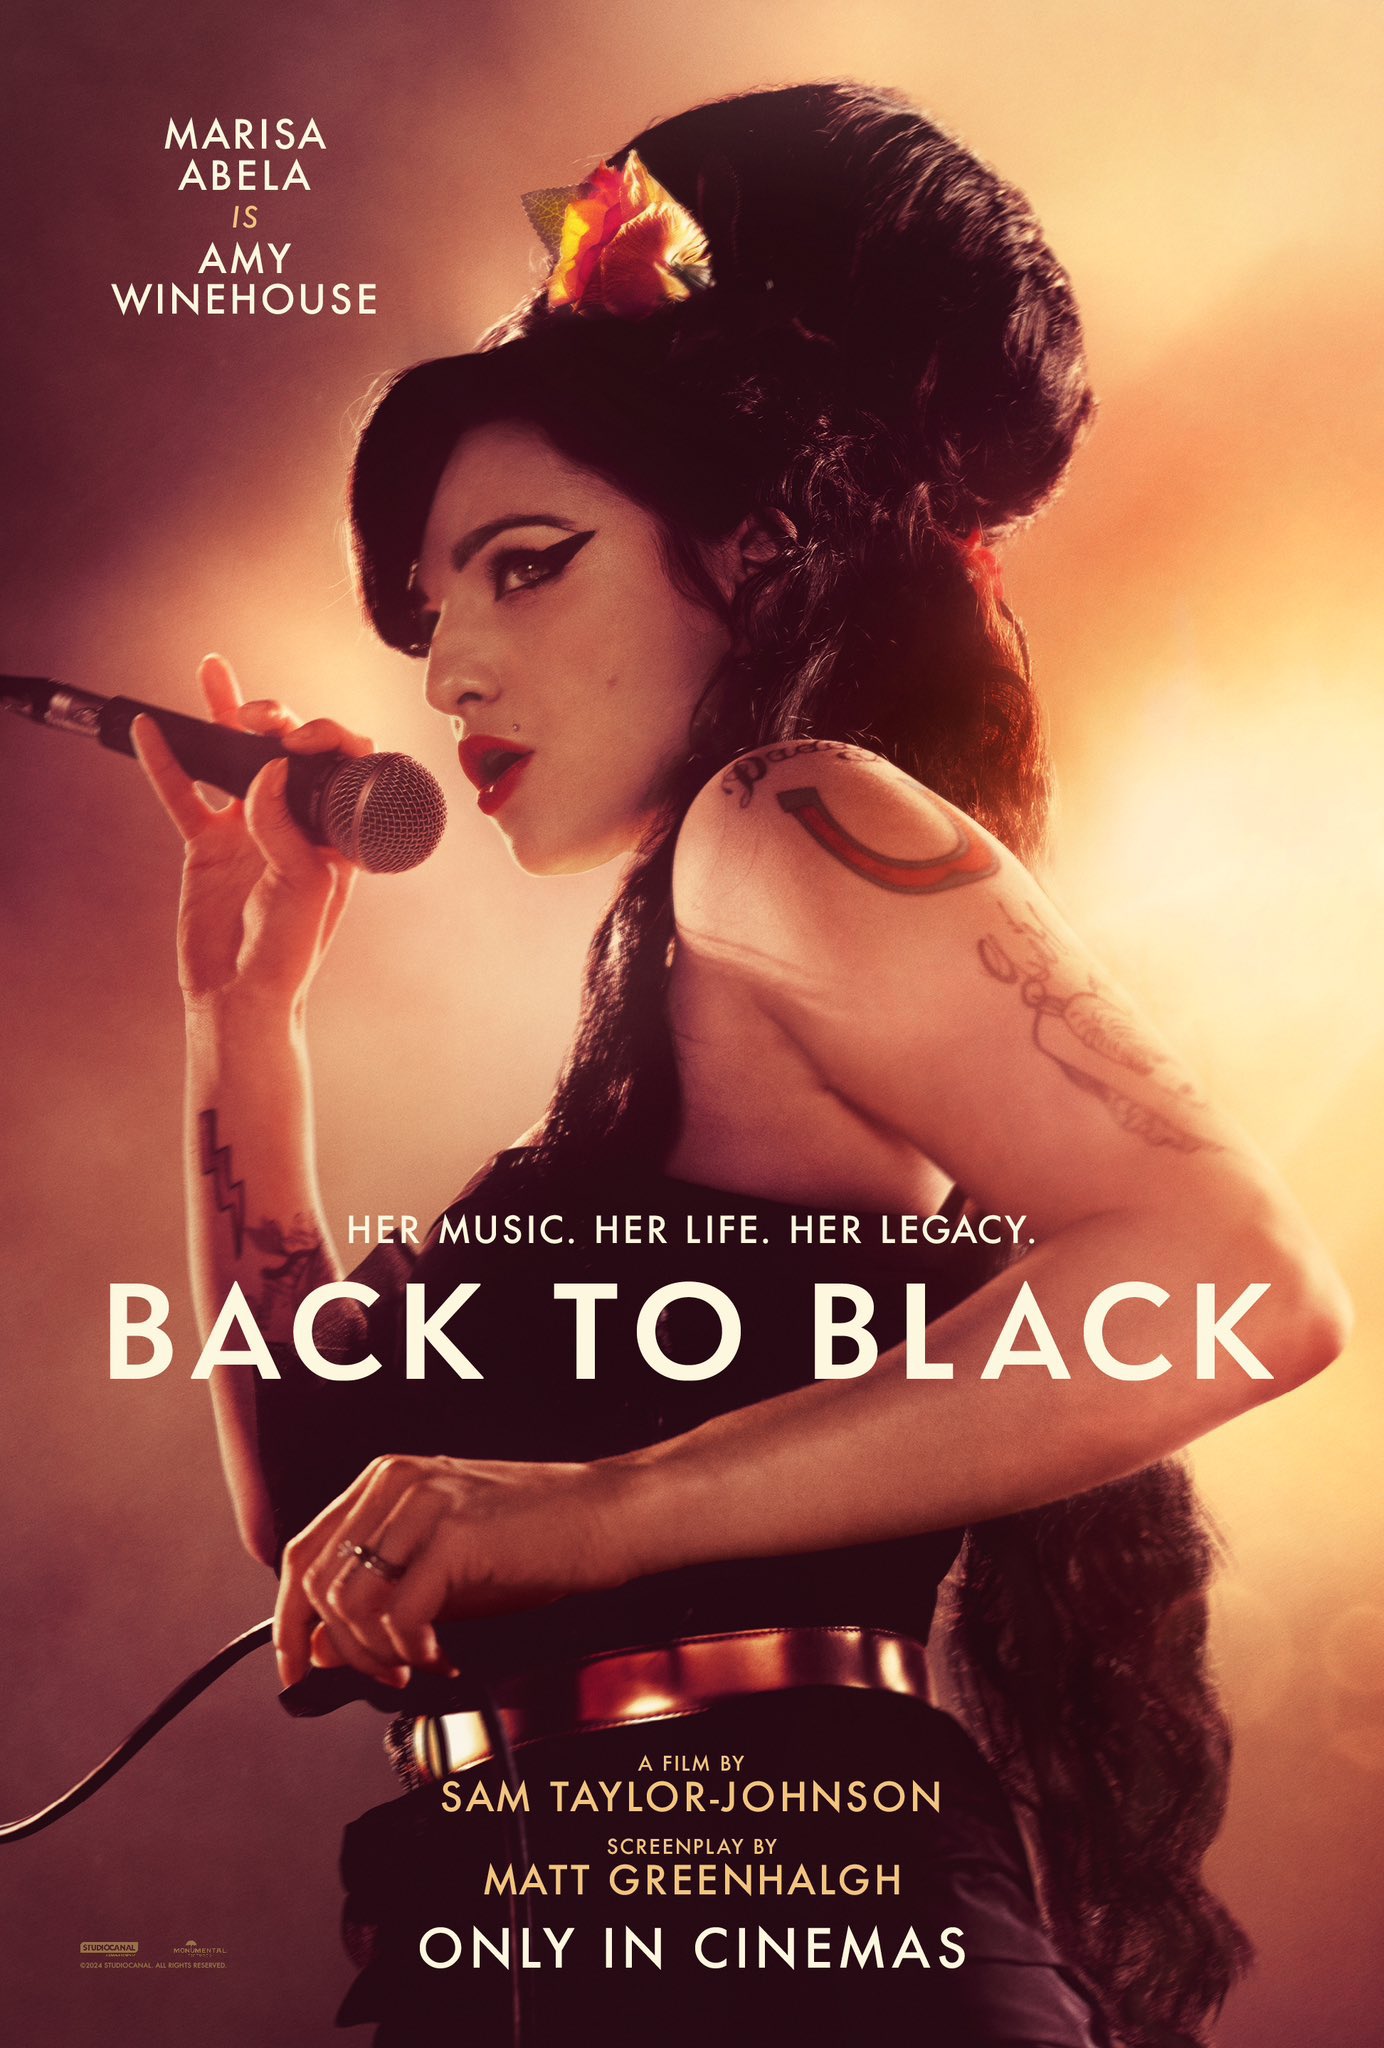 Cartaz do filme "Back to Black", sobre Amy Winehouse